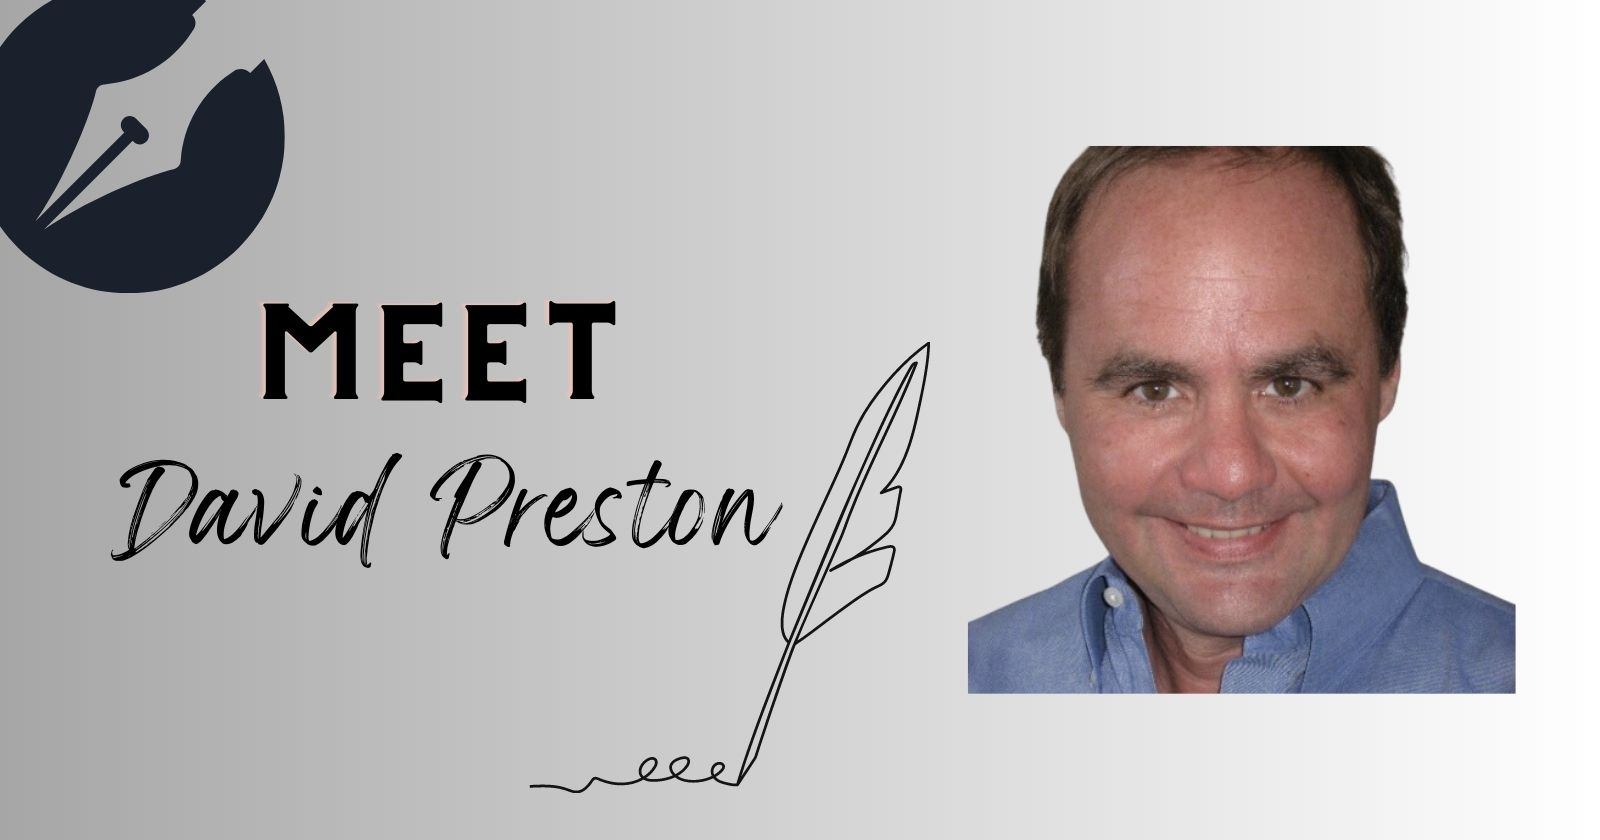 ptsd book author with a text "Meet David Preston"